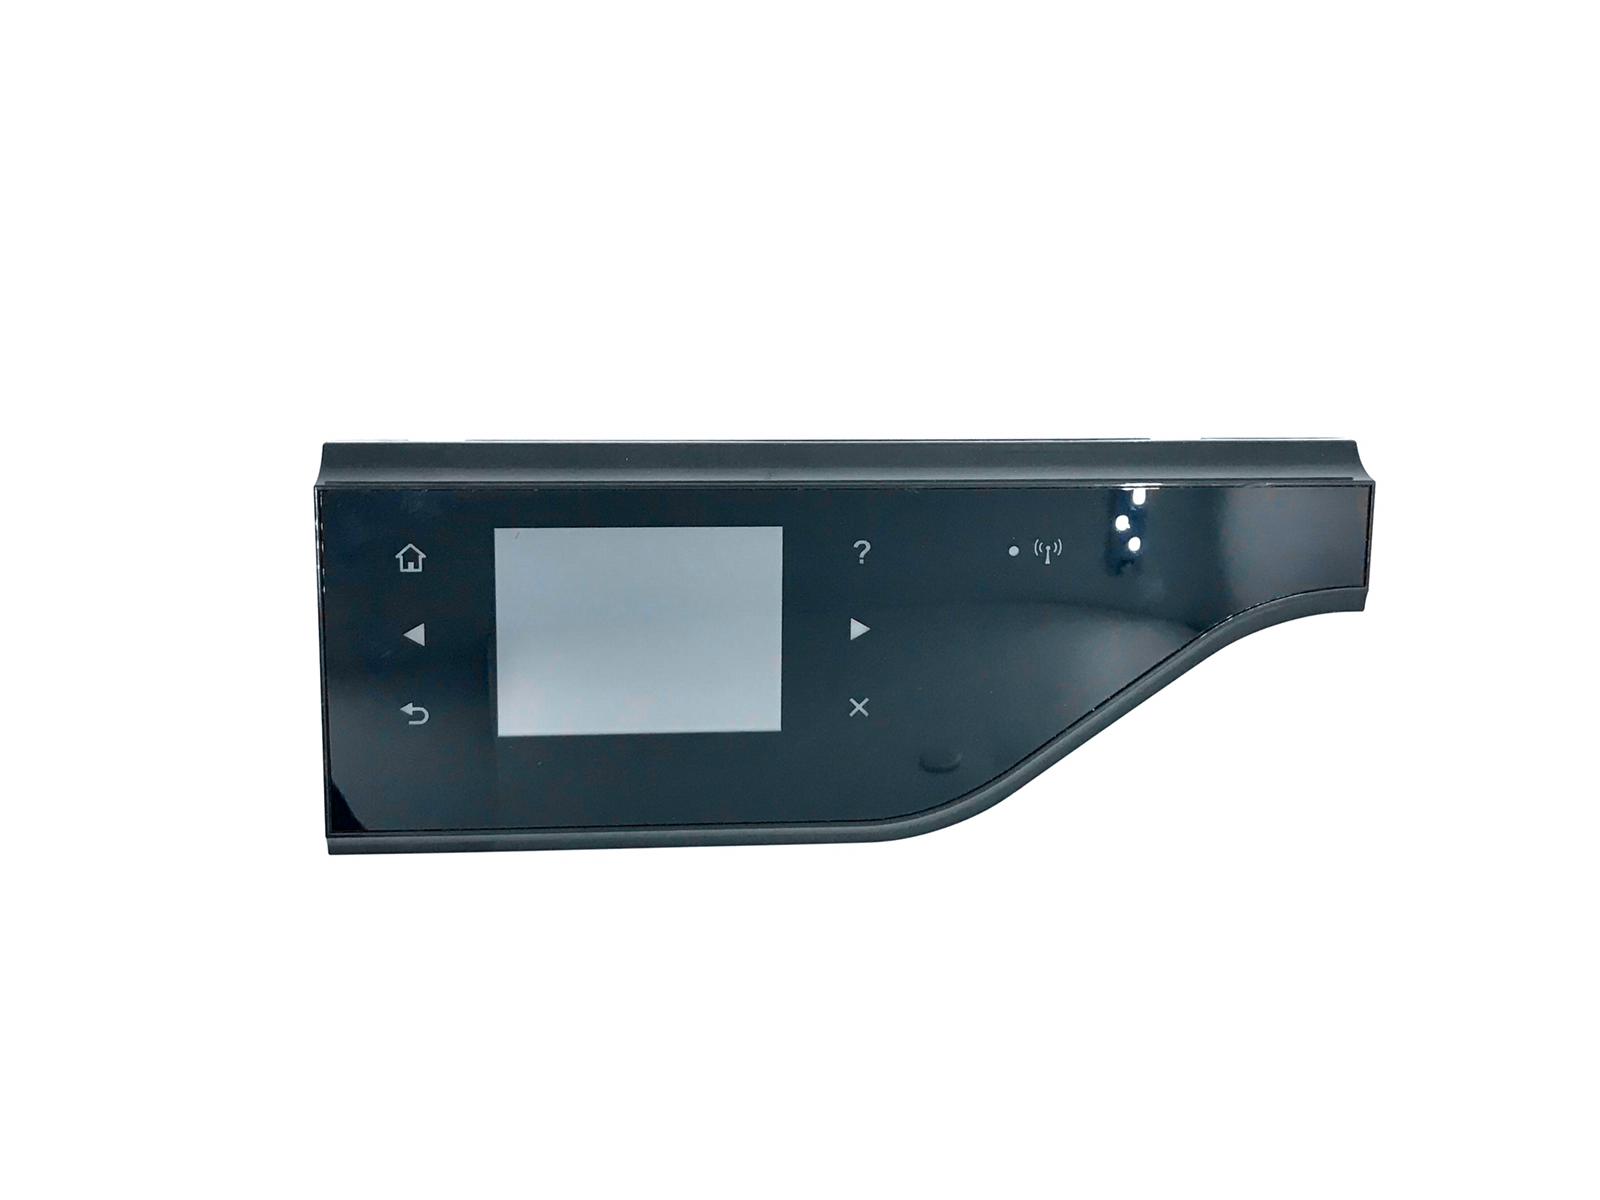 Display Control Board HP 7612 Printer CR769-60001